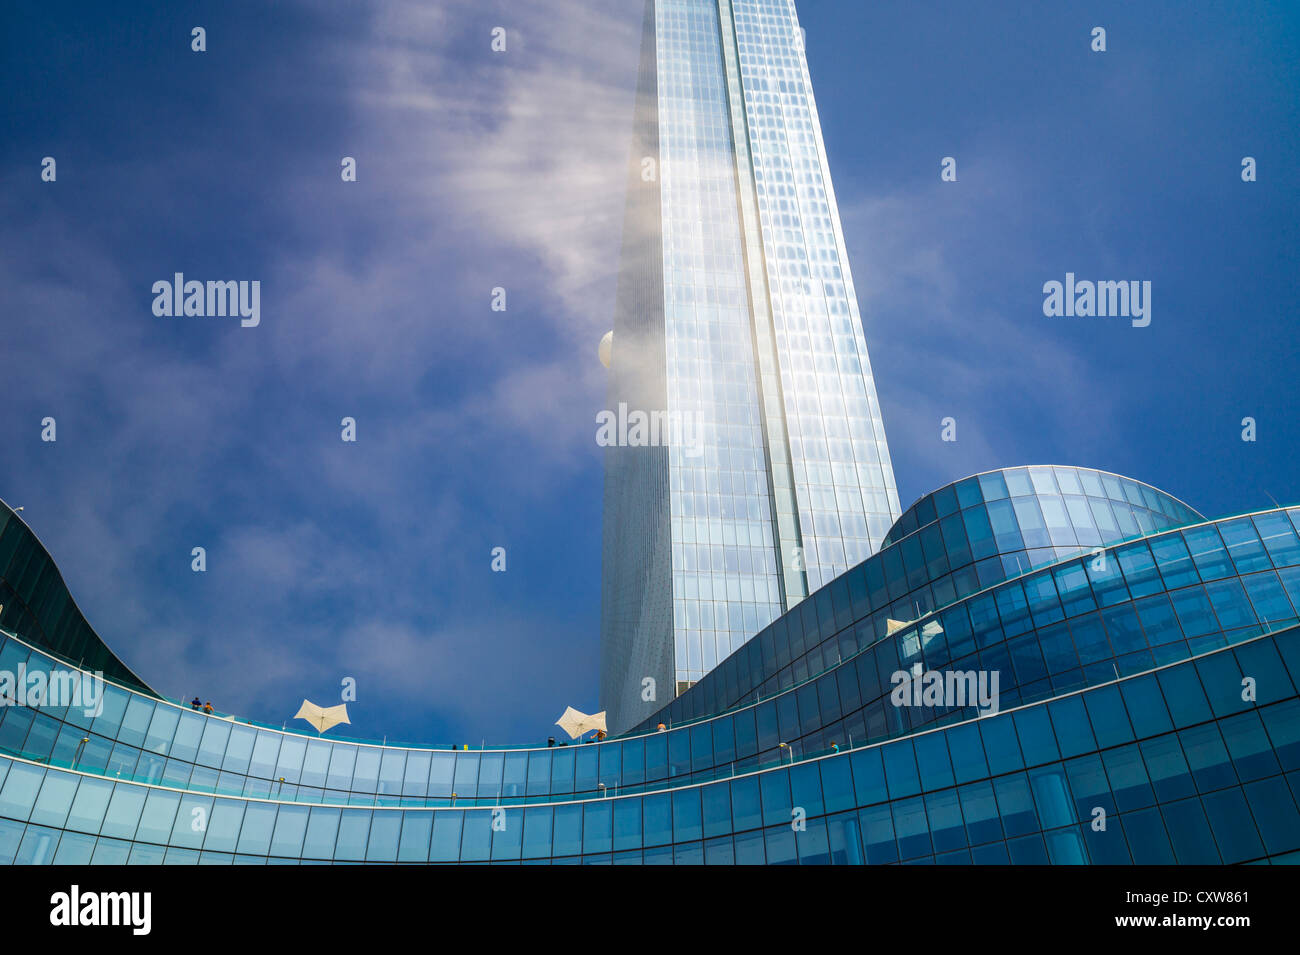 Atlantic CIty, NJ, Casino, ocean Stock Photo Alamy